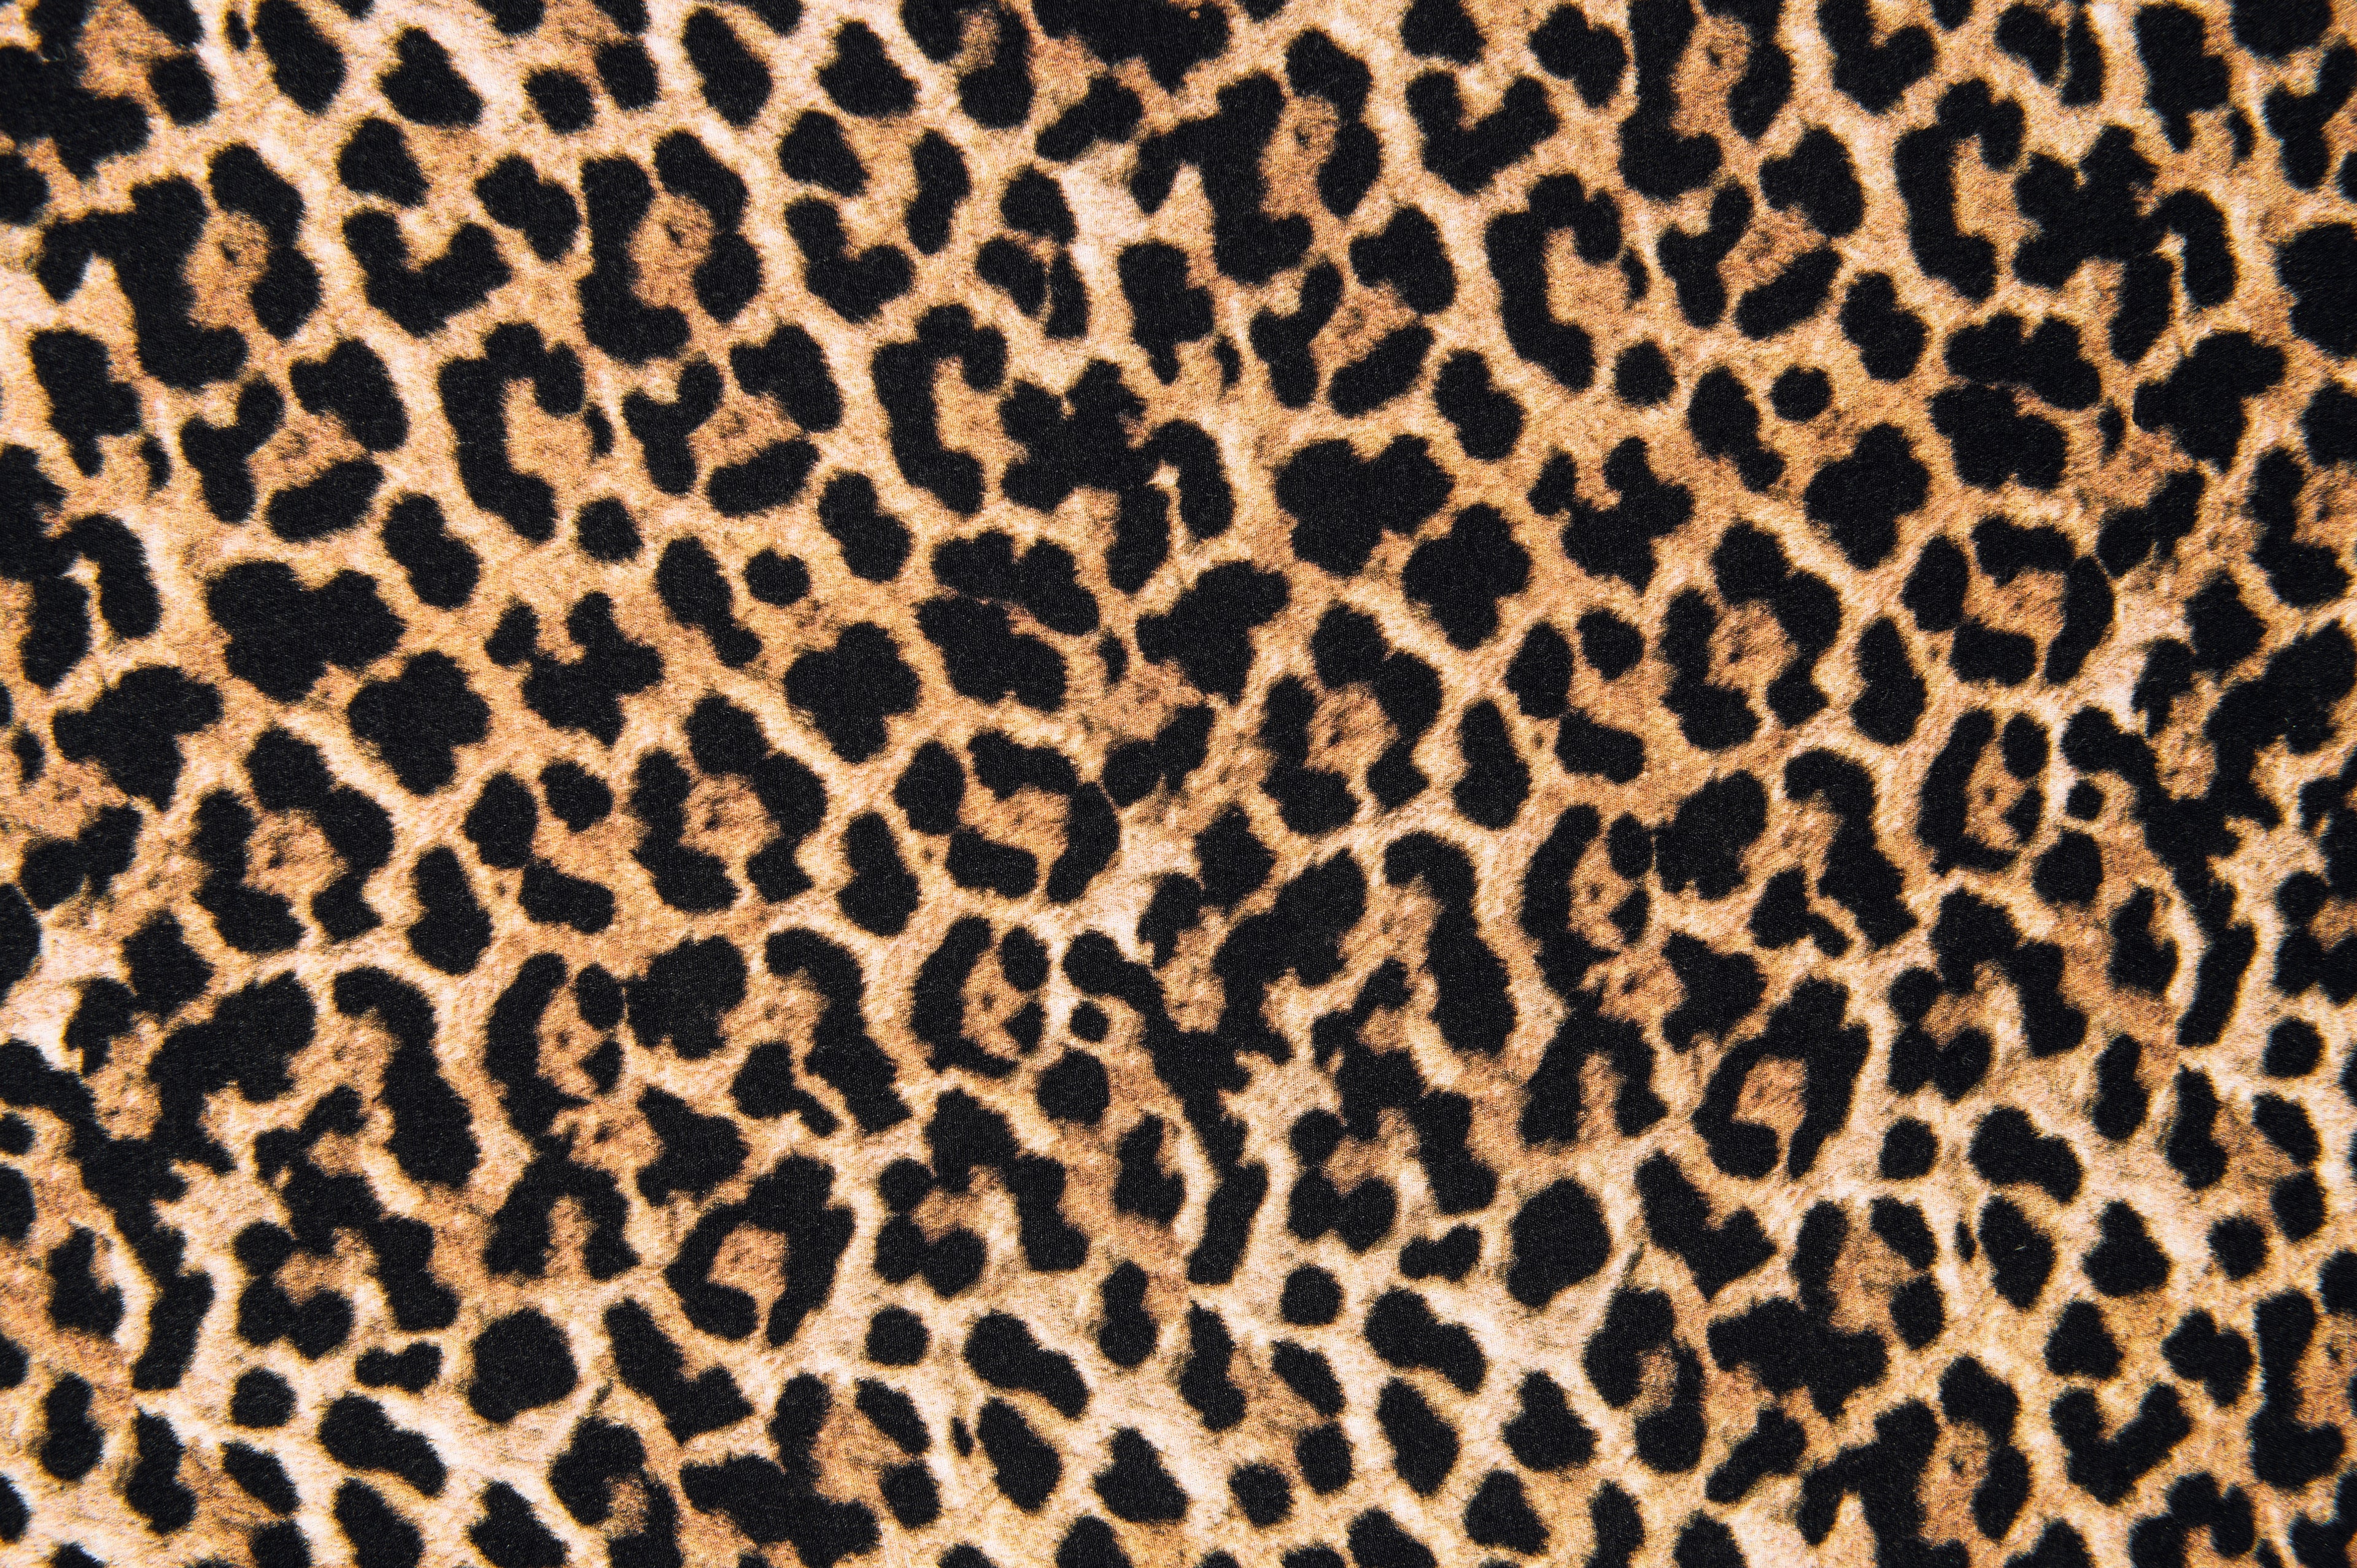 Leopard print design and texture